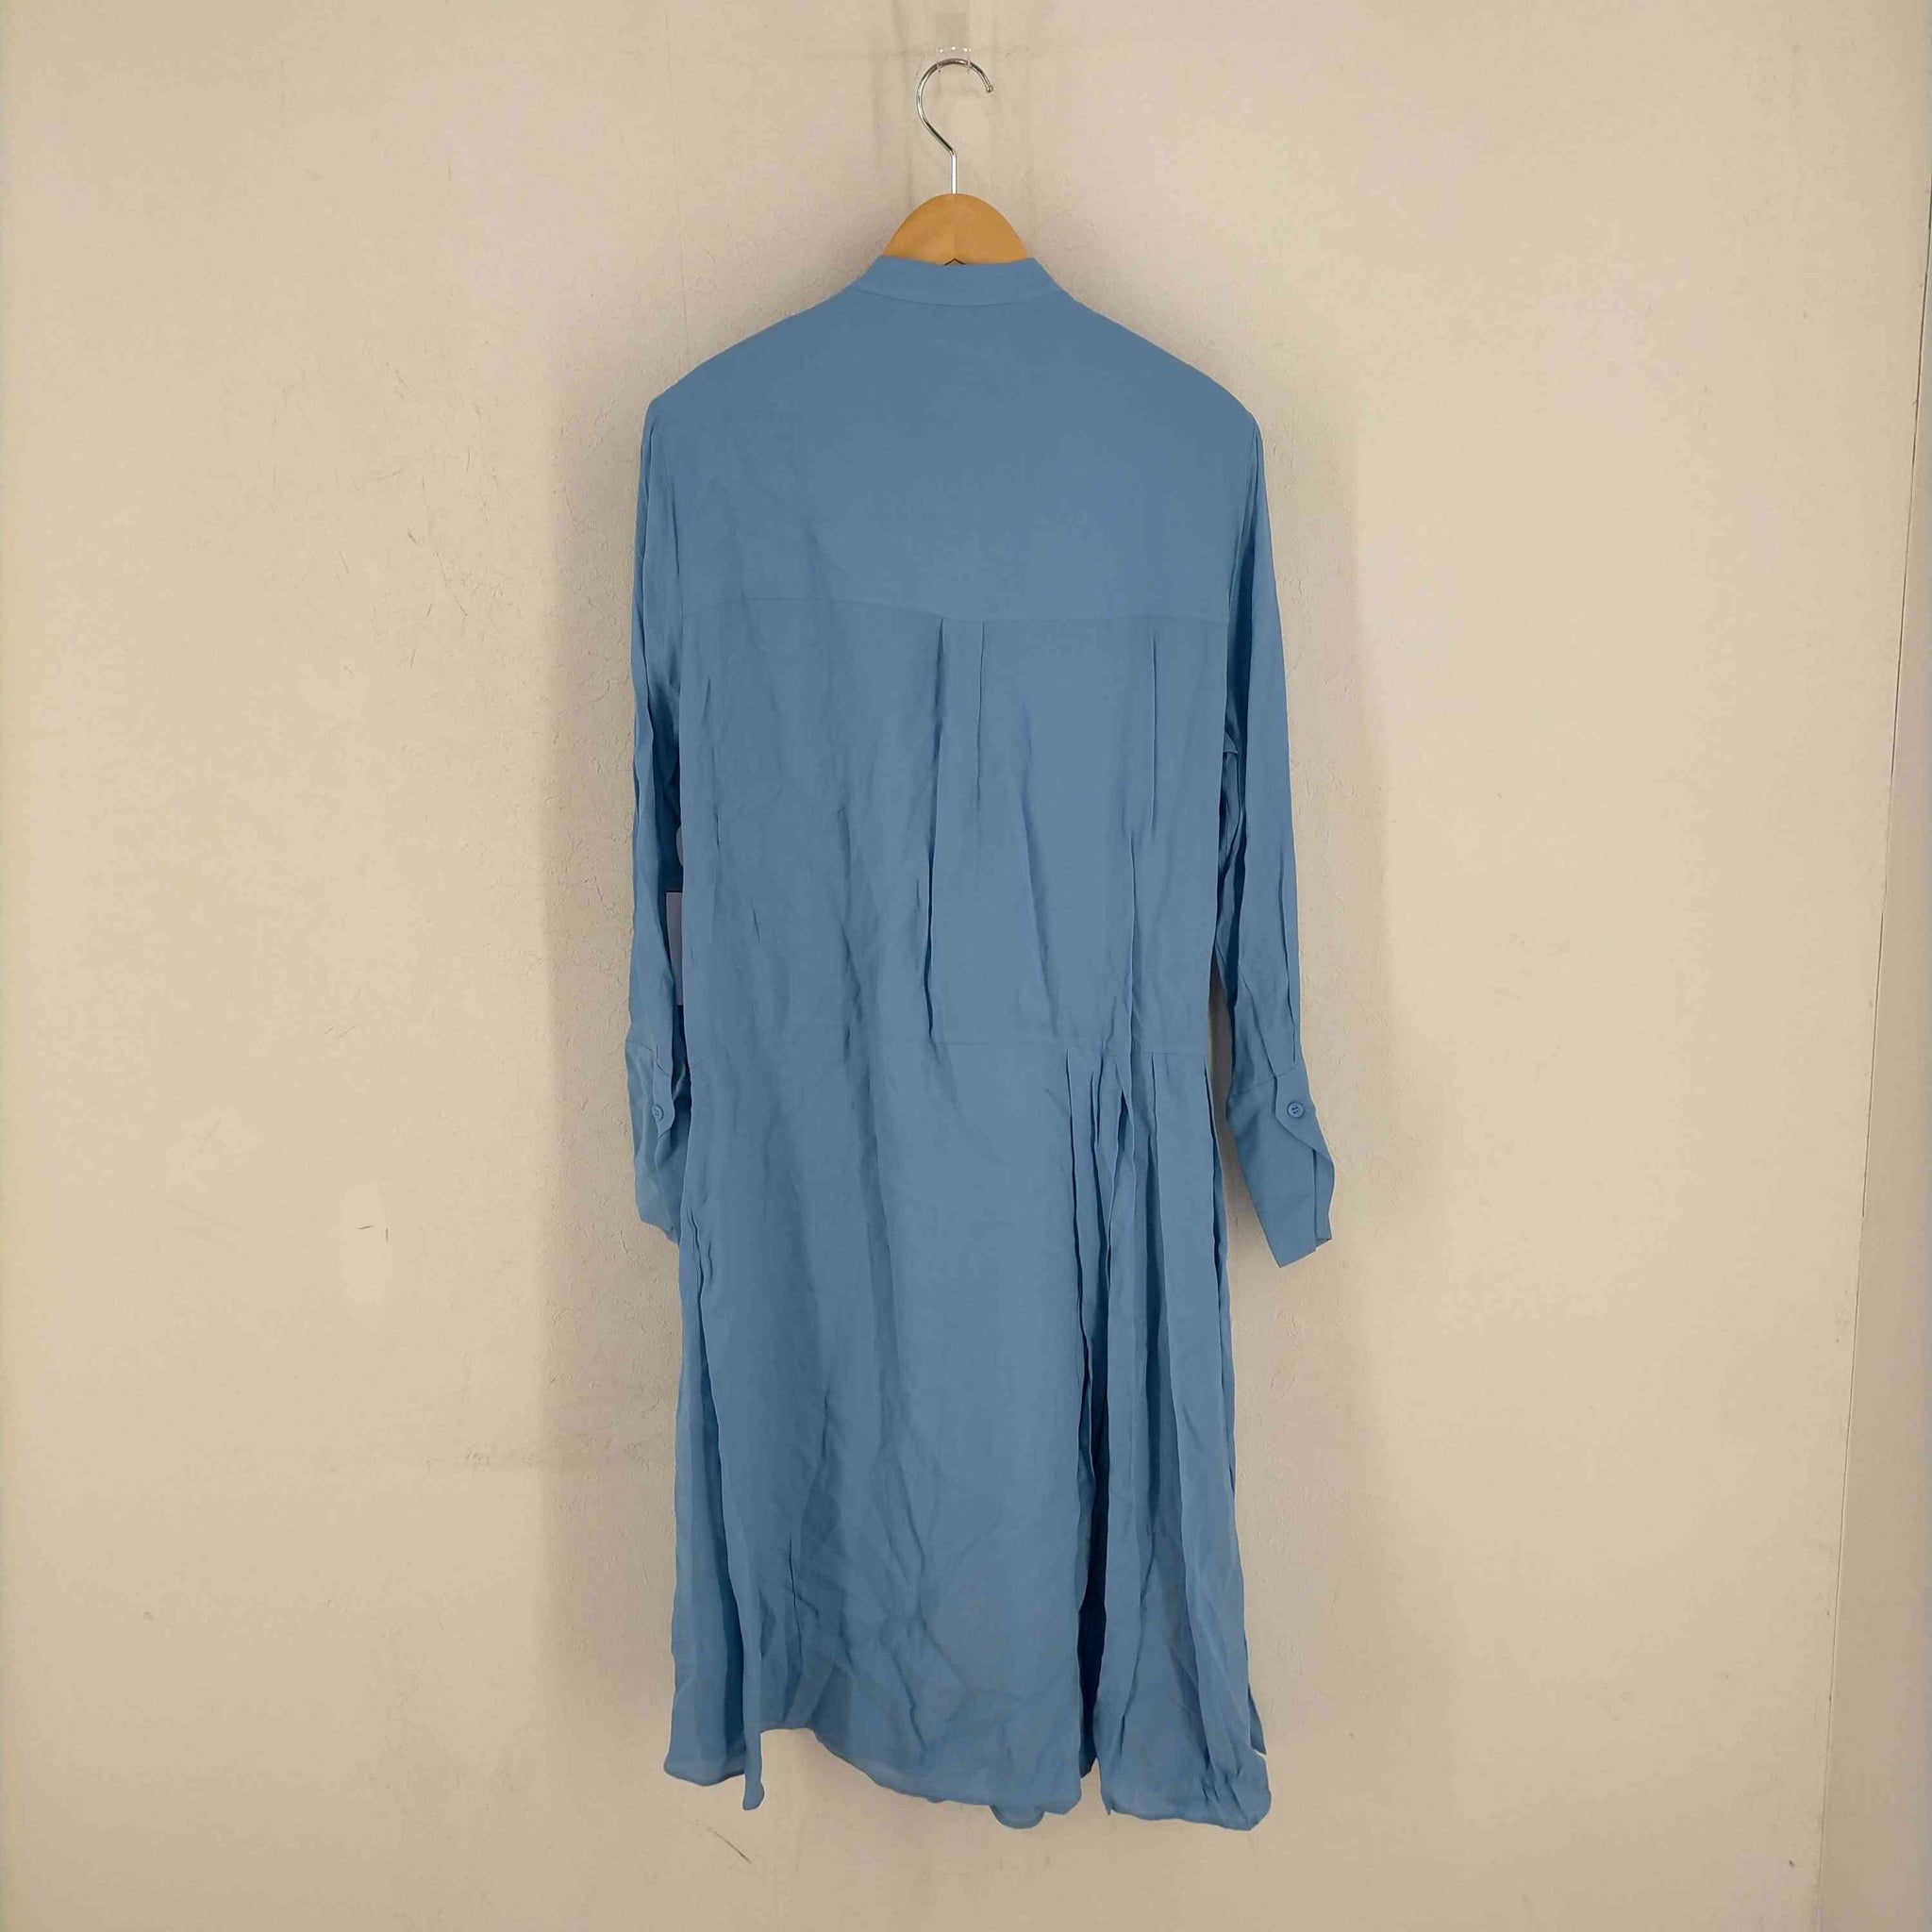 ZARA(ザラ)Lace-up shirt dress